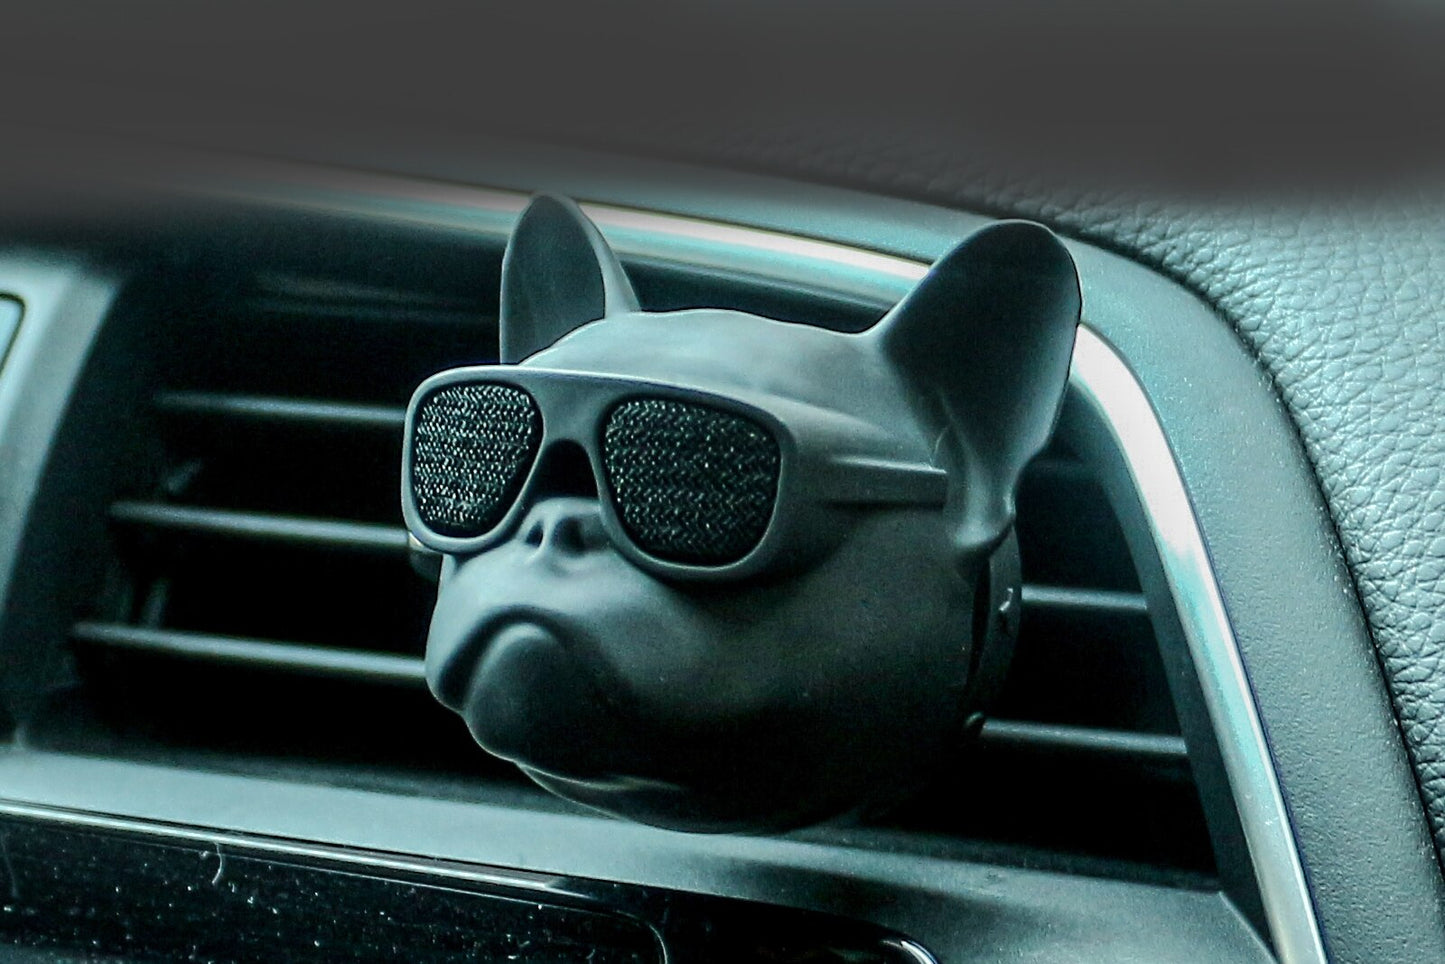 French Bulldog Car Air freshener - Style's Bug